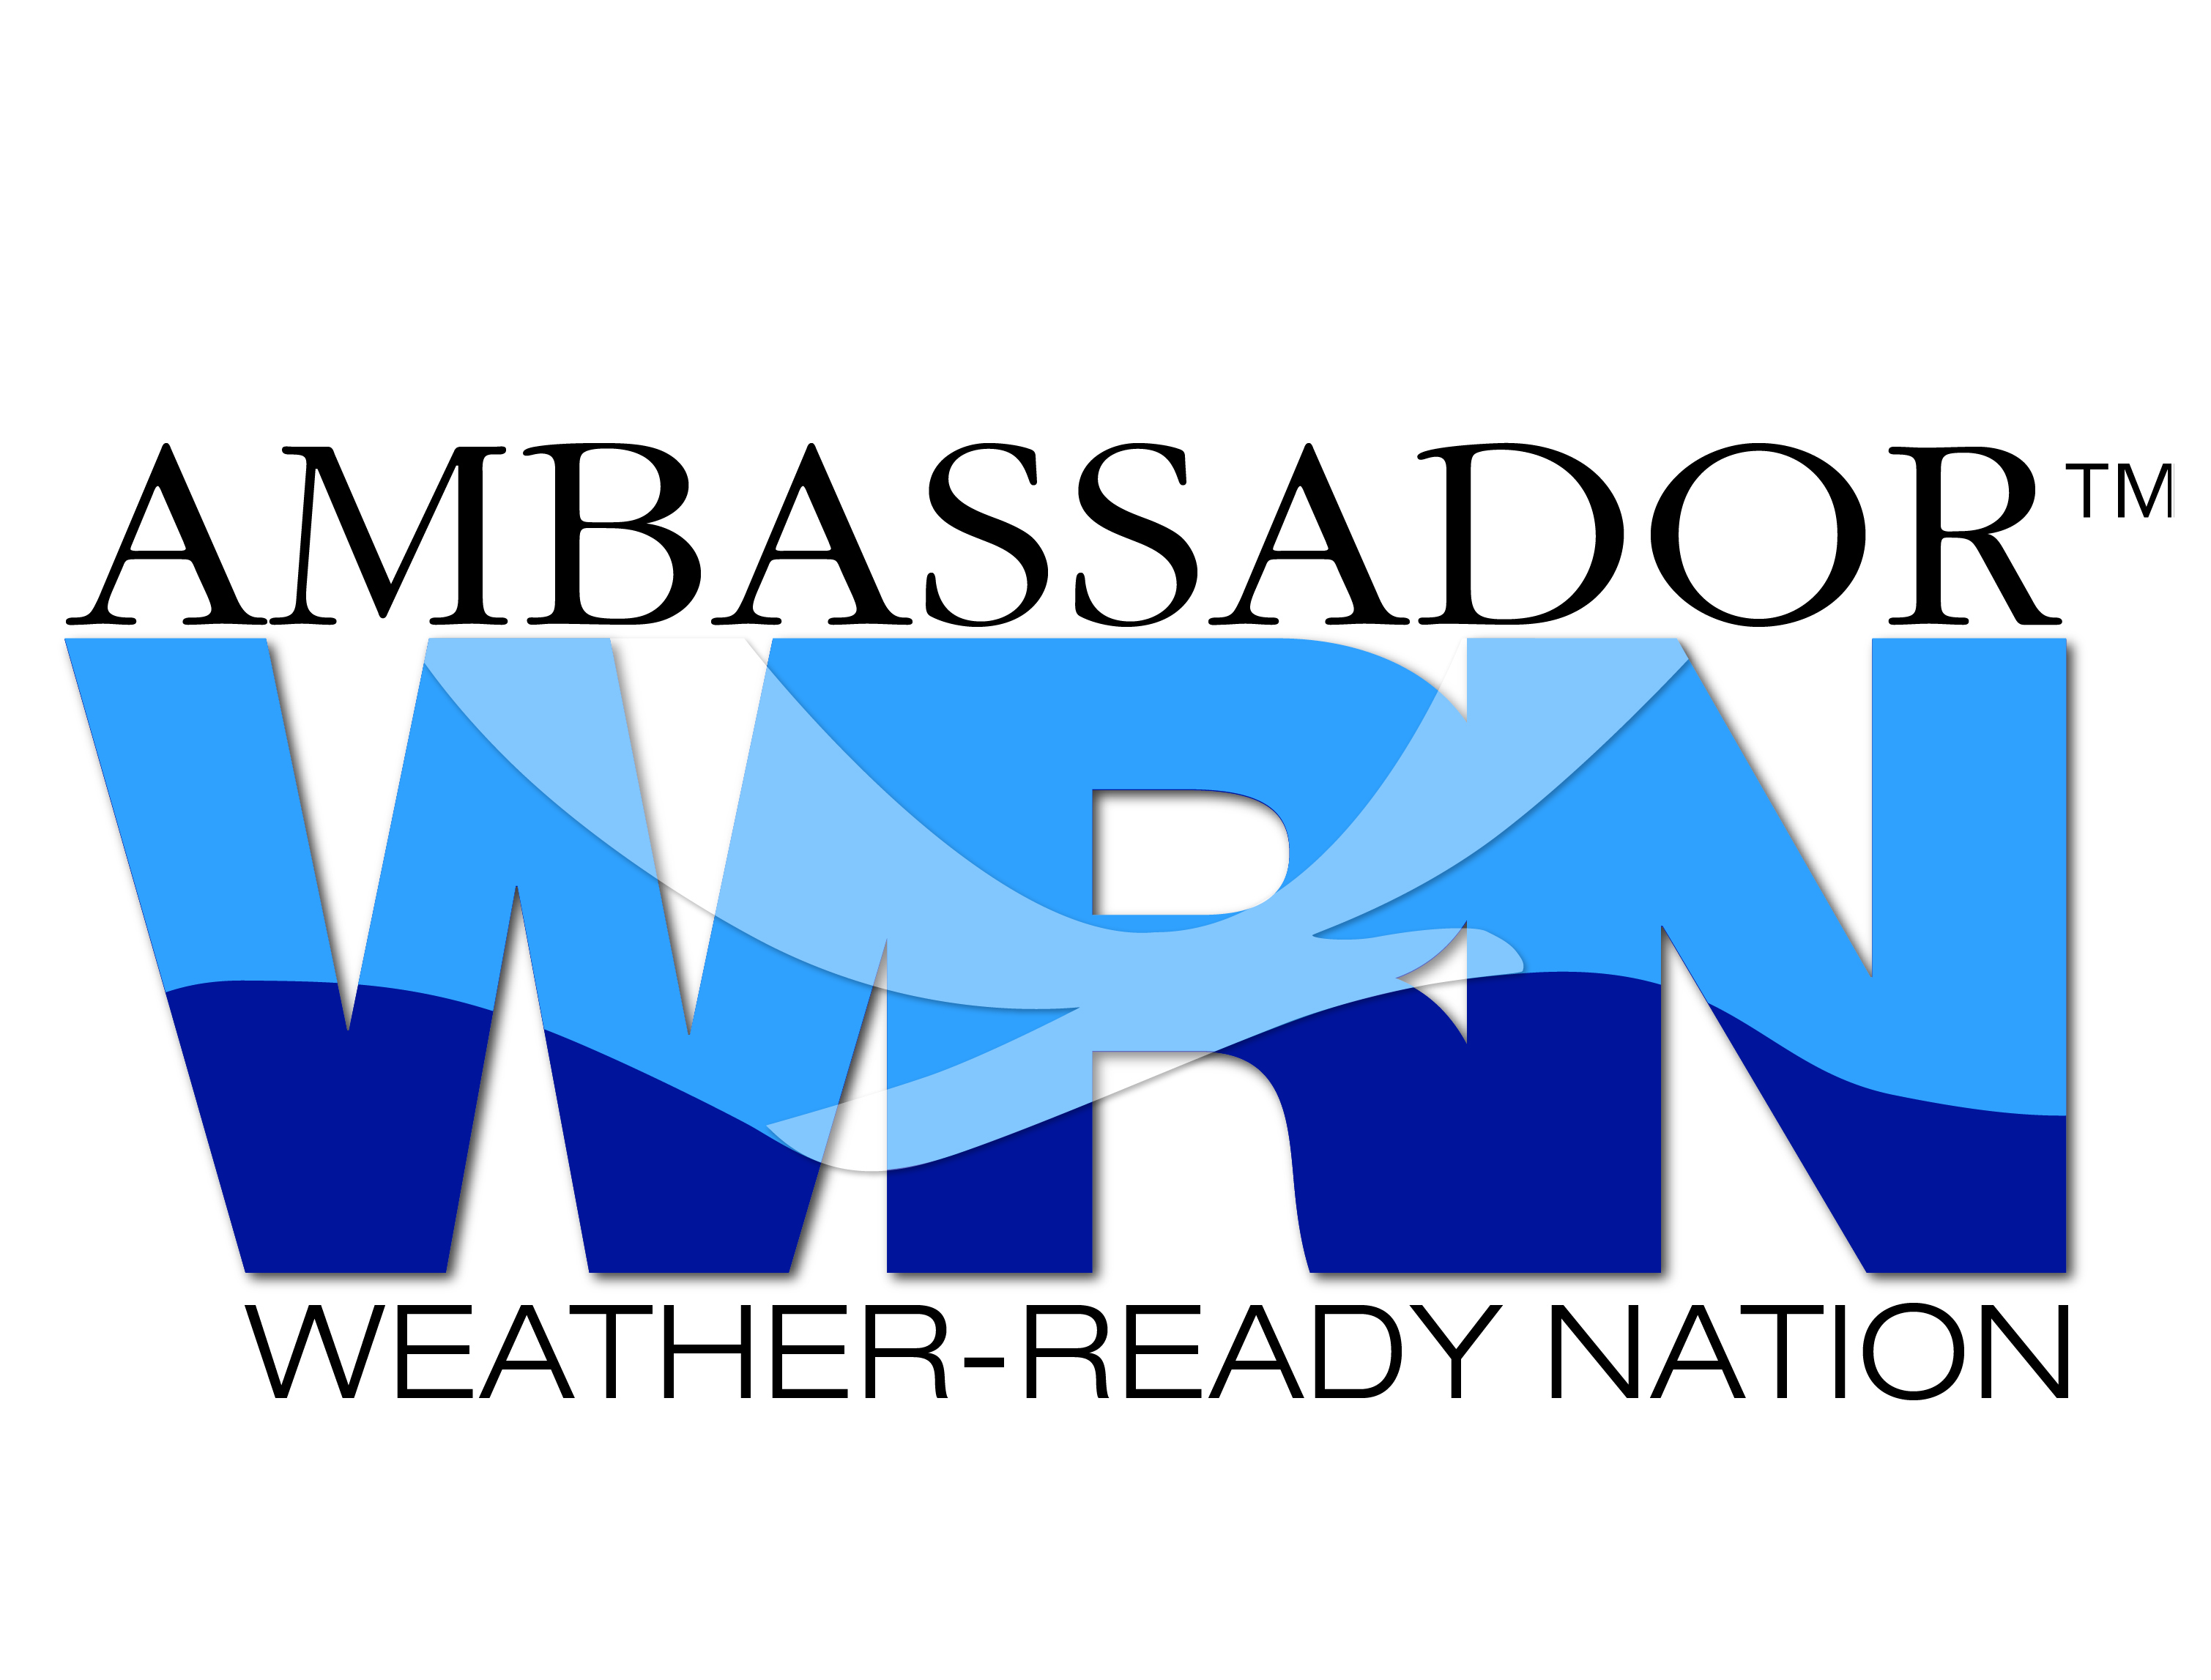 Weather-Ready Nation Ambassador